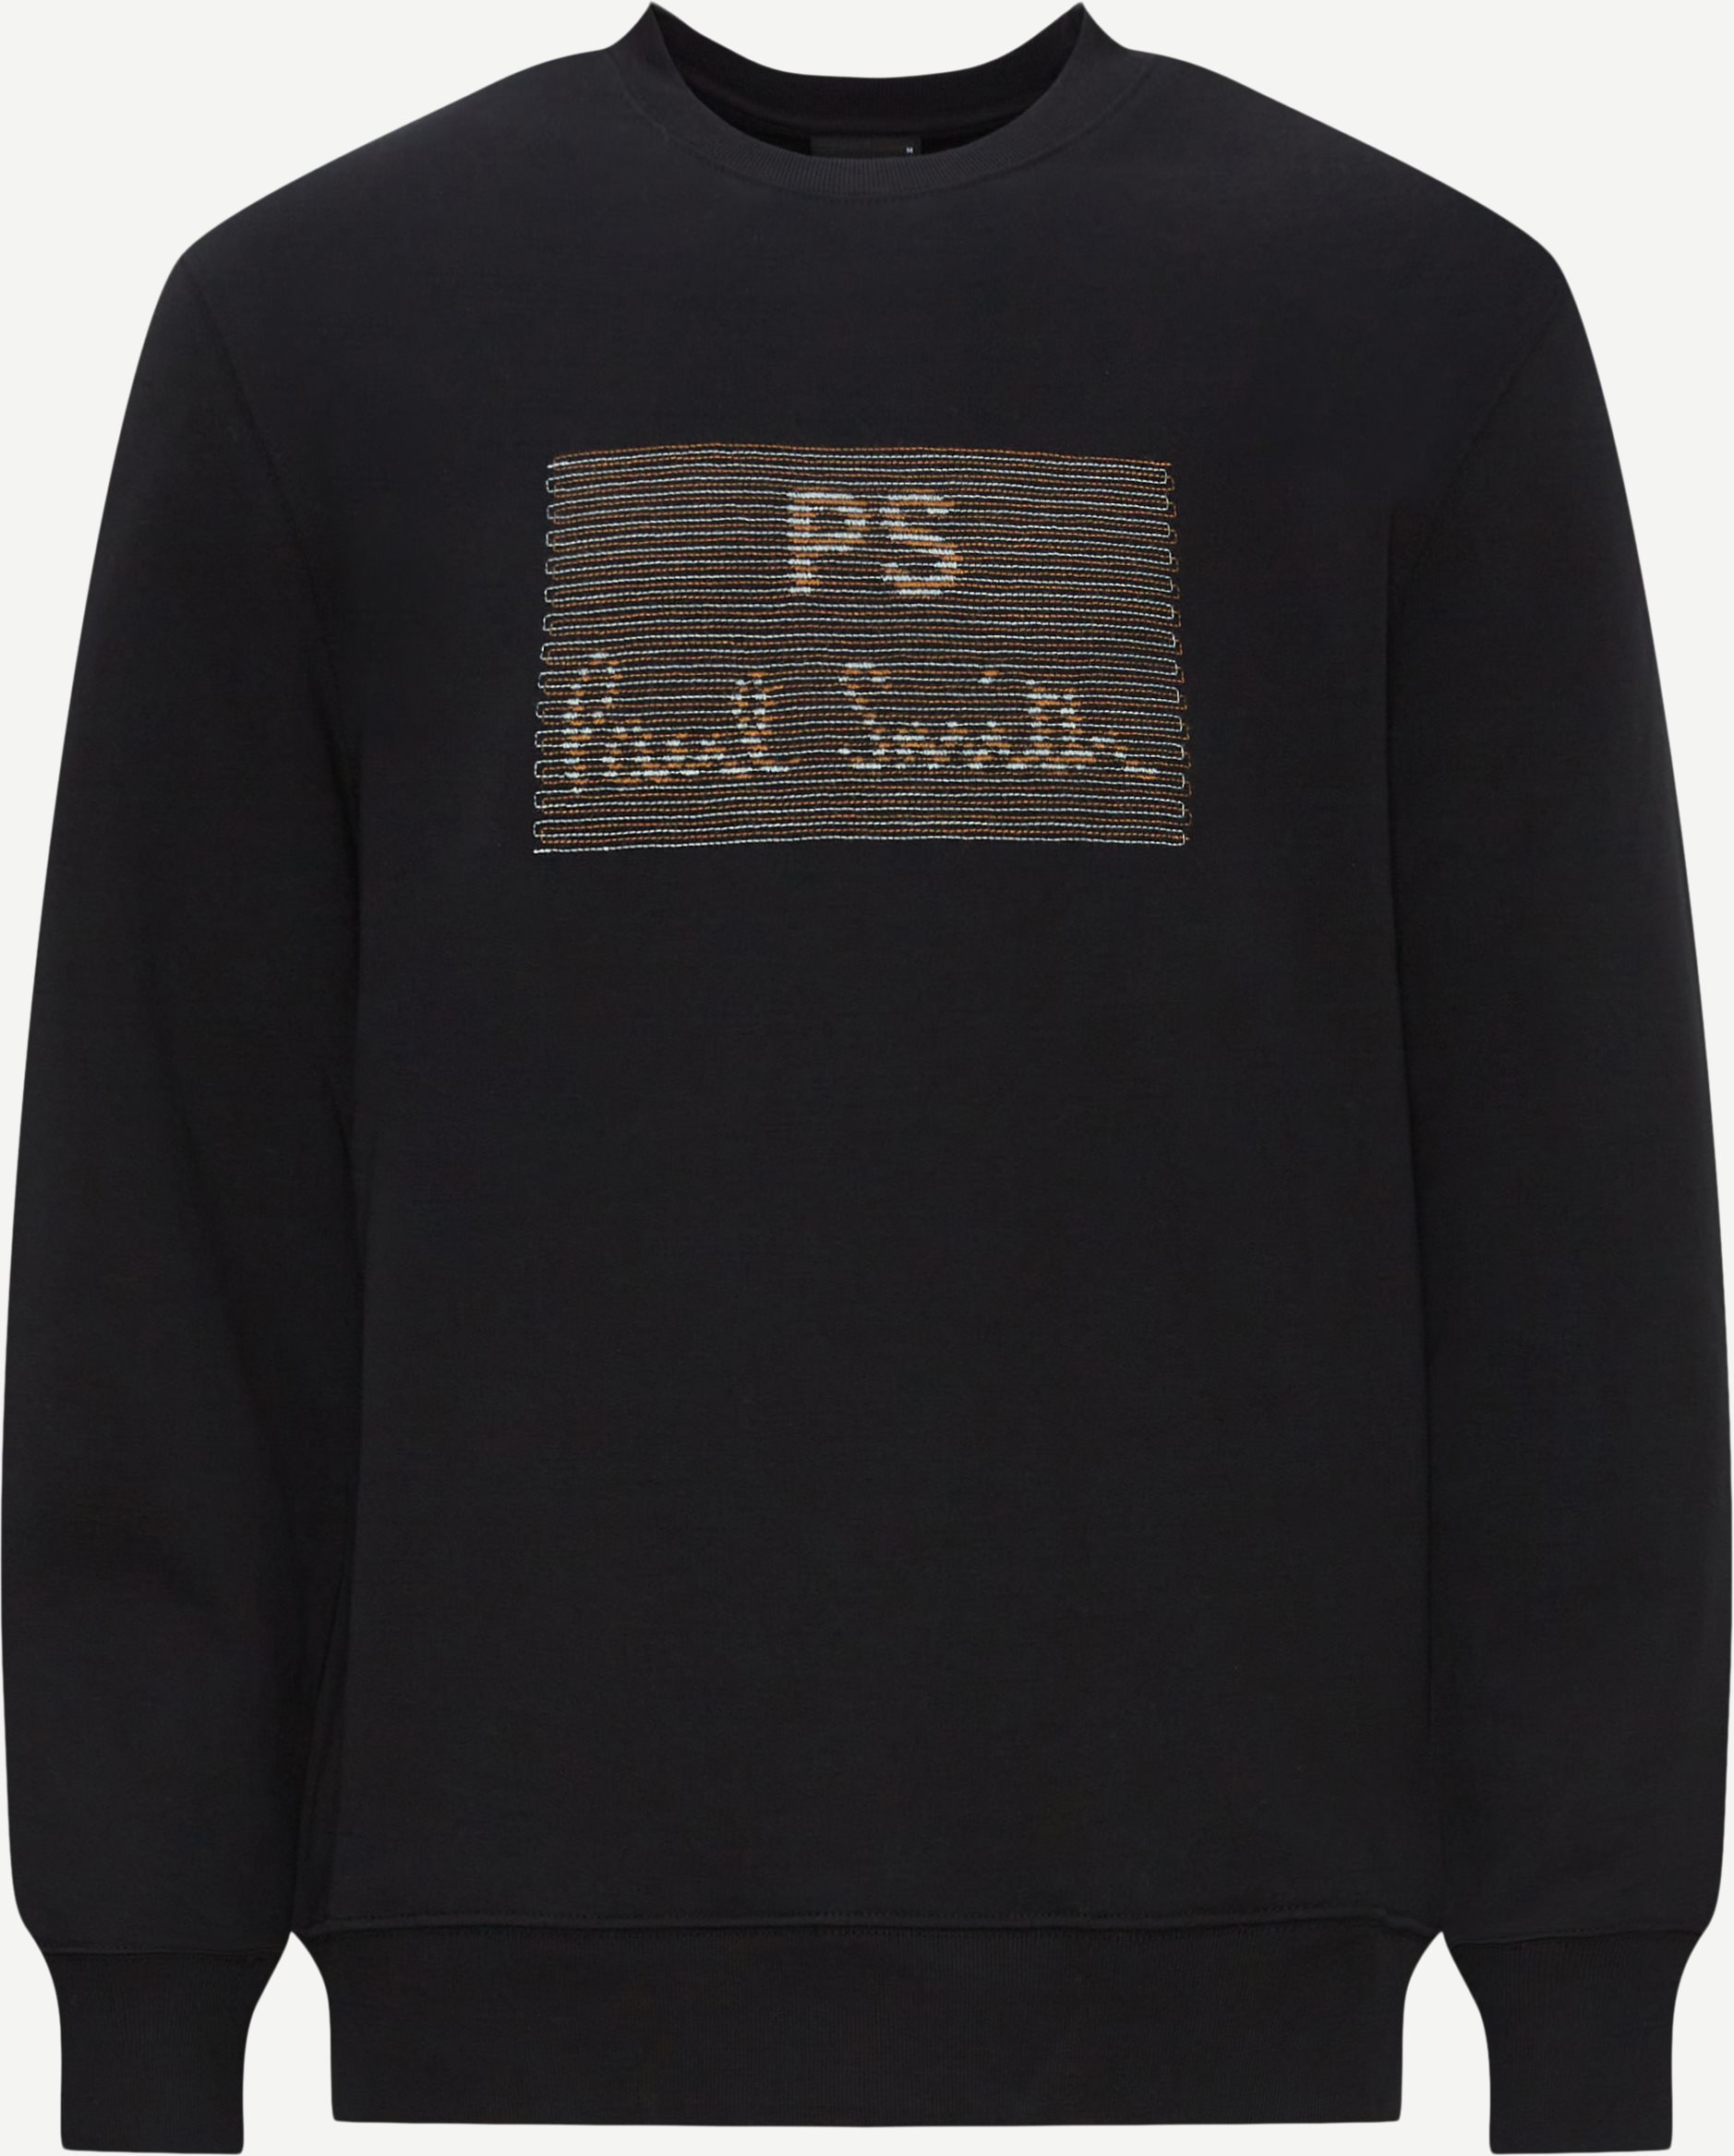 PS Paul Smith Sweatshirts 668UE-MP4372 MENS REG FIT SWEATSHIRT Sort